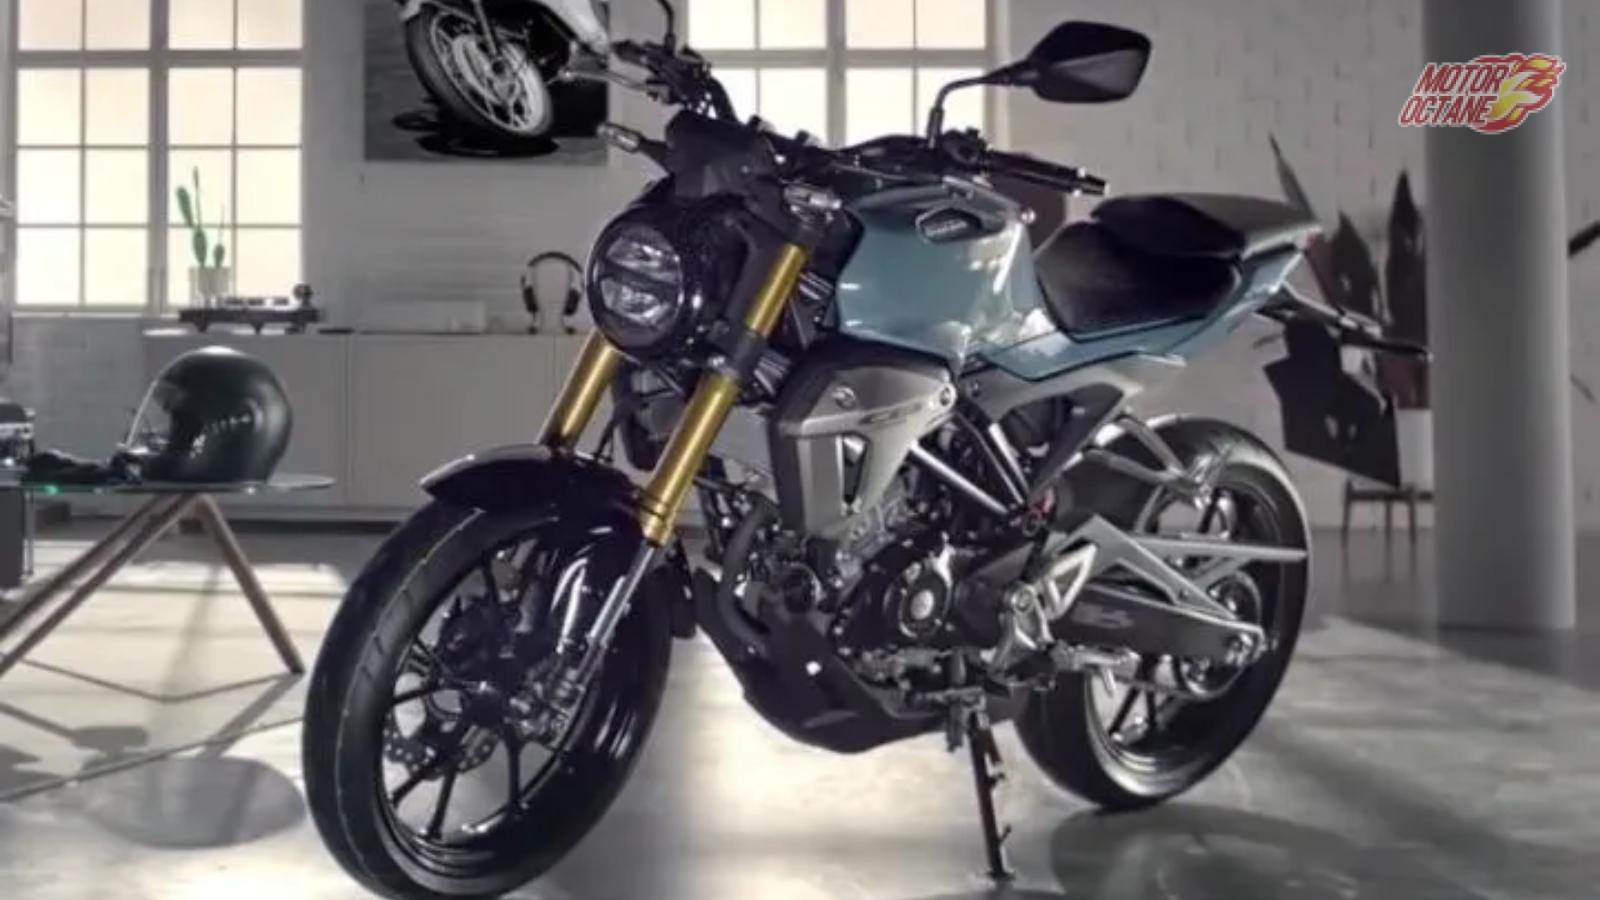 Honda CB150R ExMotion - Chances for India? » MotorOctane